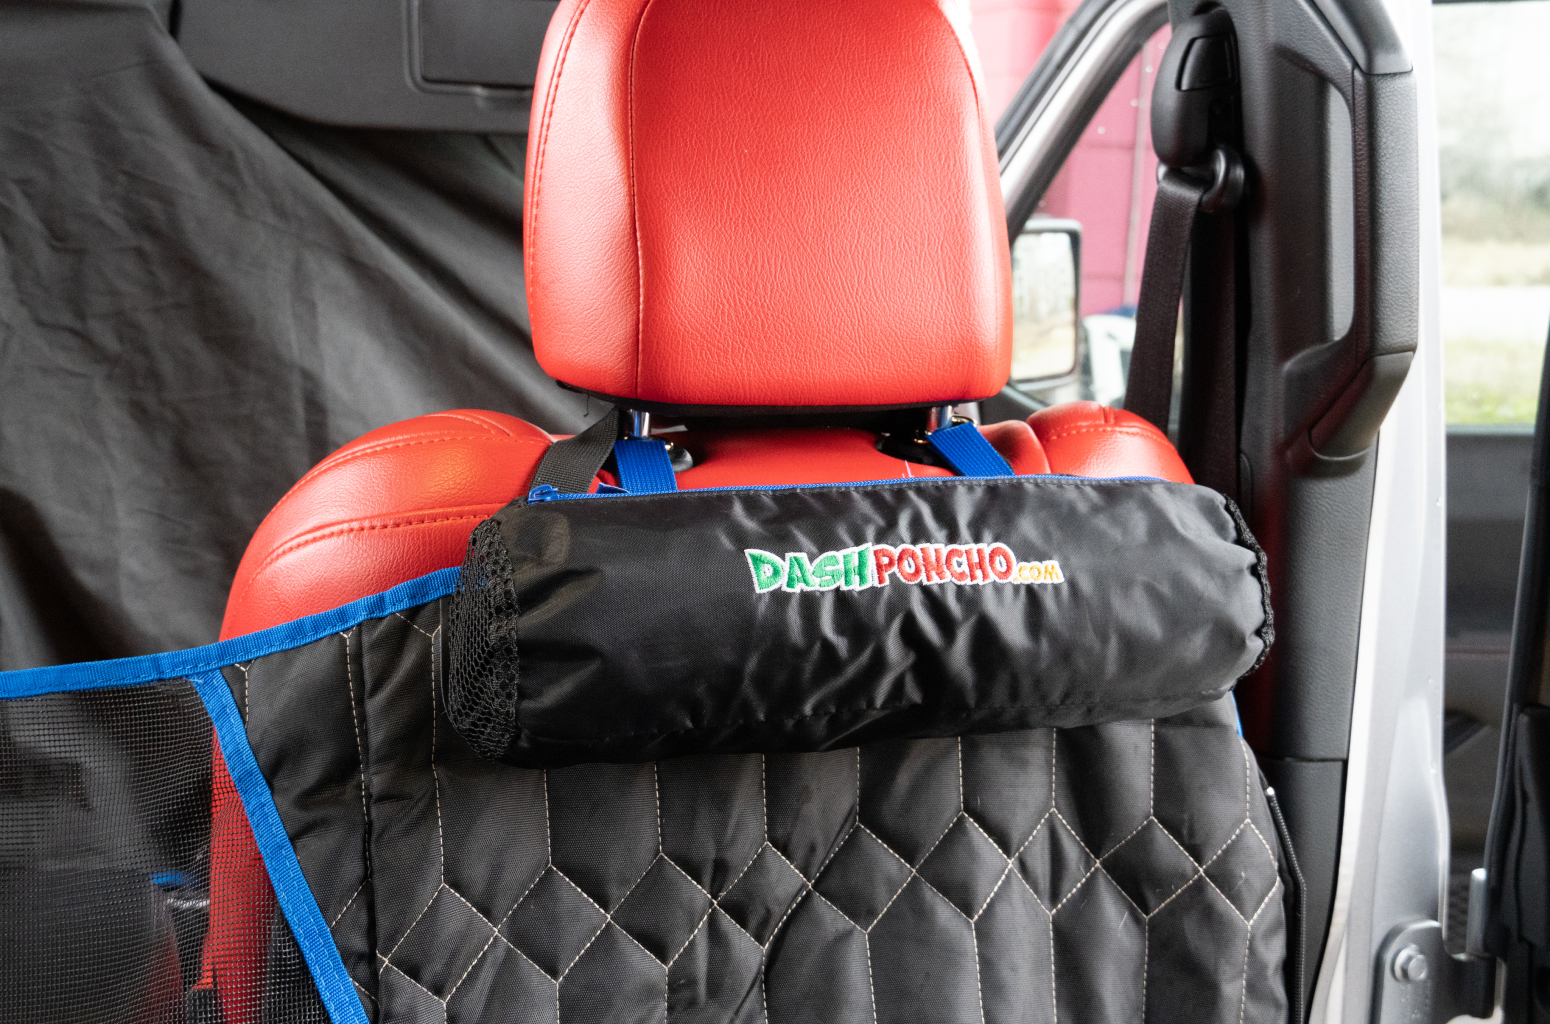 JT Jeep Dash Poncho storage bag passenger side seat view with logo